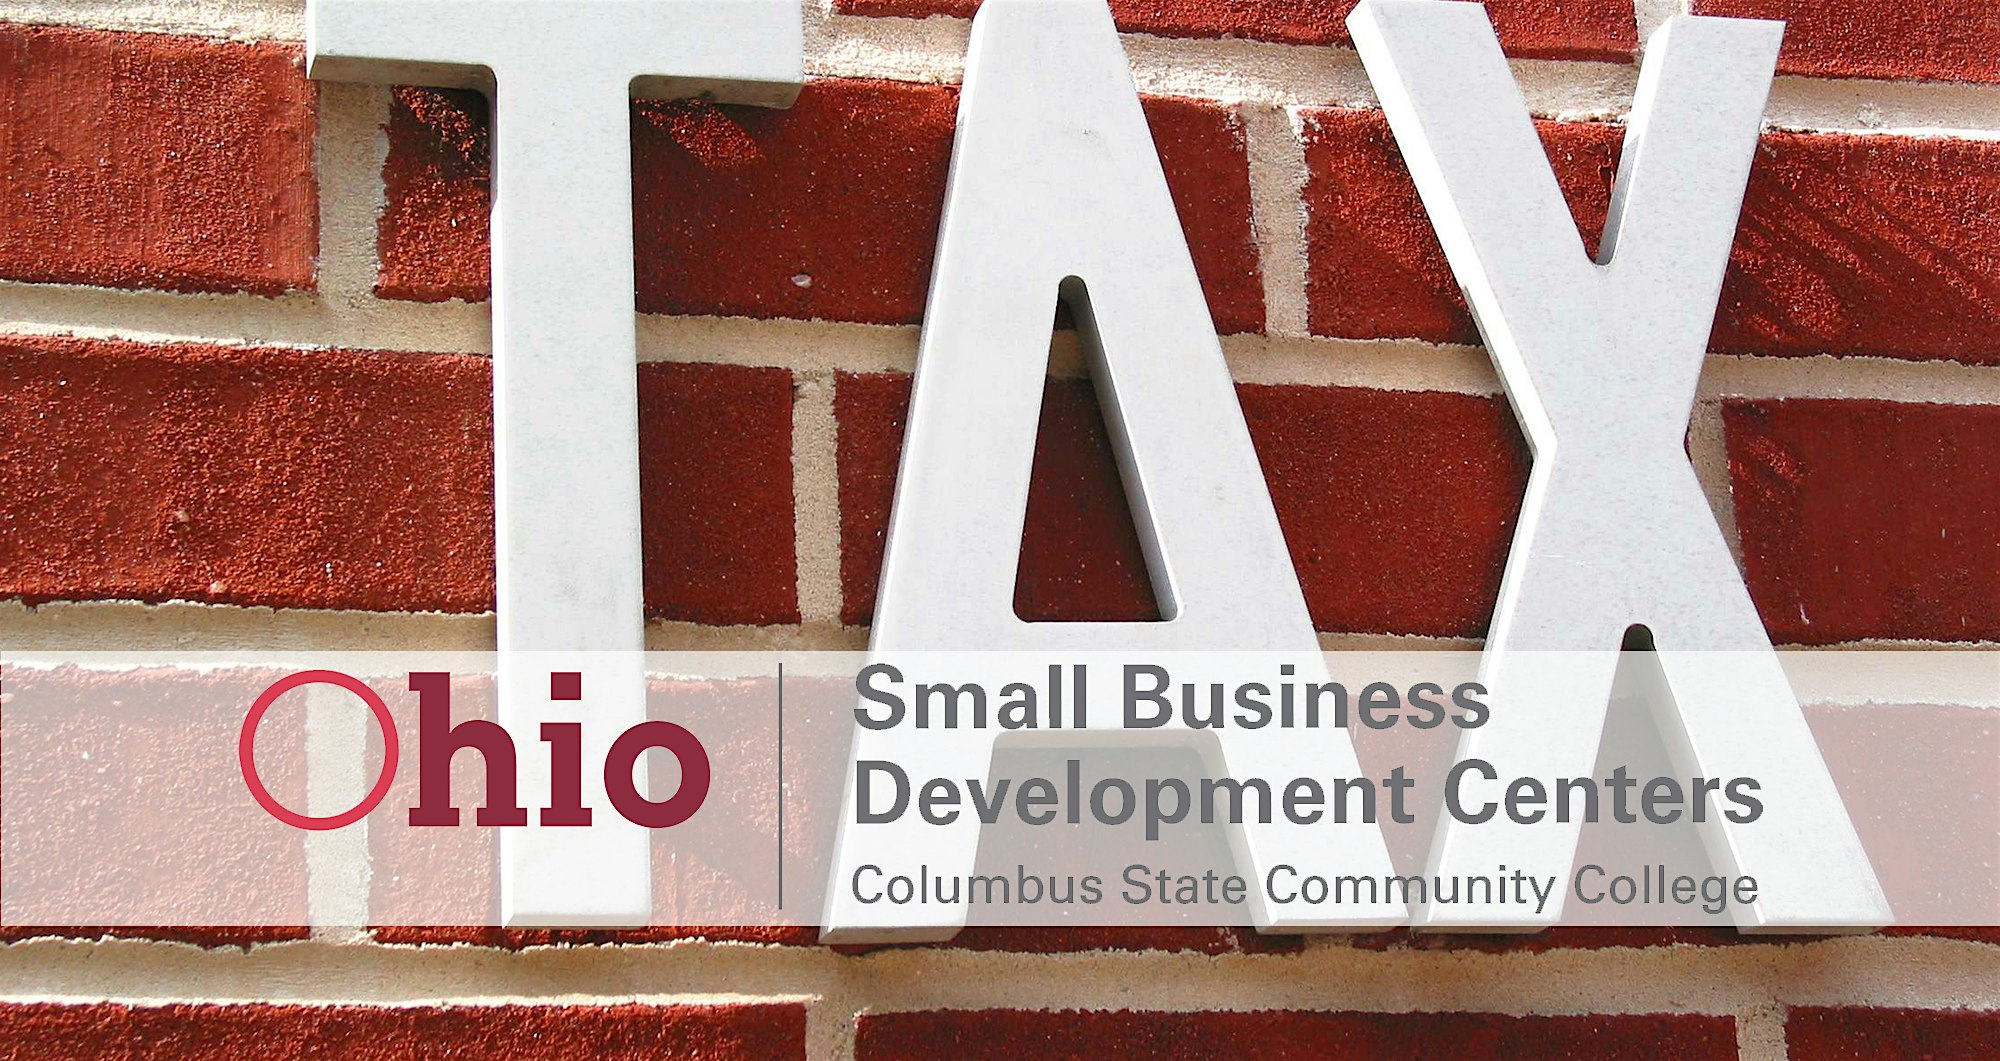 Ohio SBDC Small Business Tax Workshop